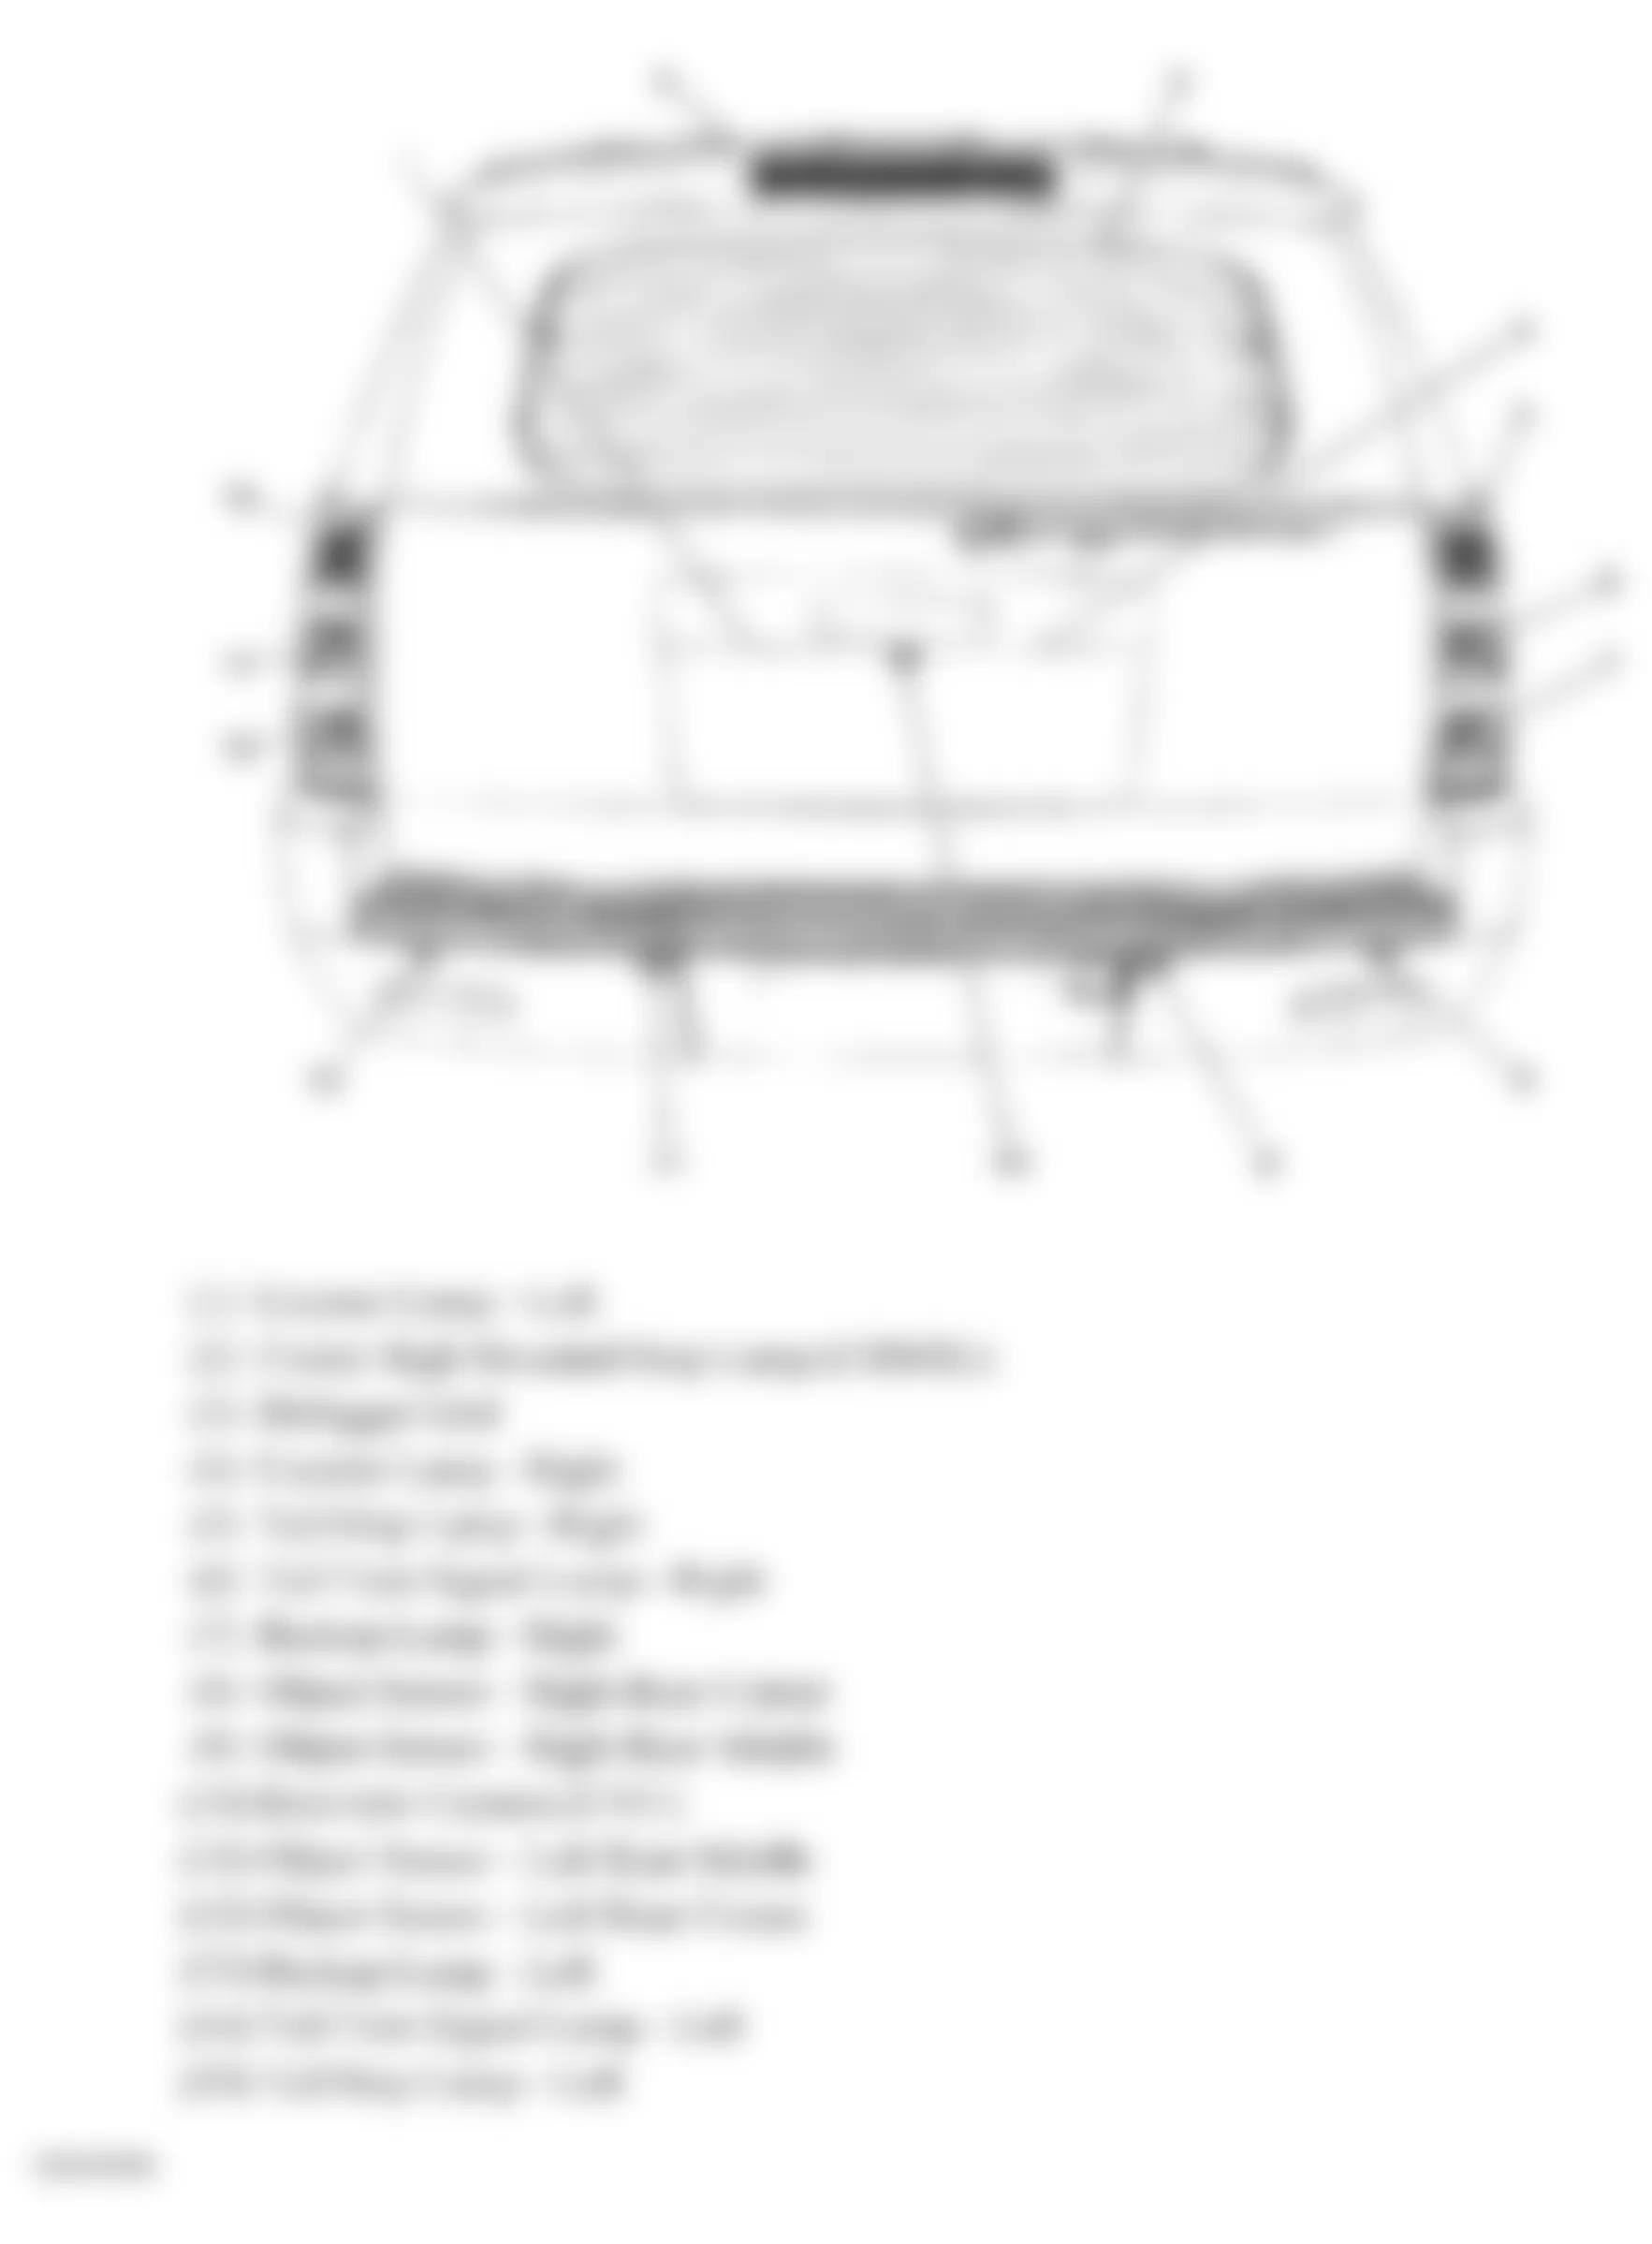 GMC Yukon XL K1500 2007 - Component Locations -  Rear Of Vehicle (Yukon W/One Piece Liftgate)